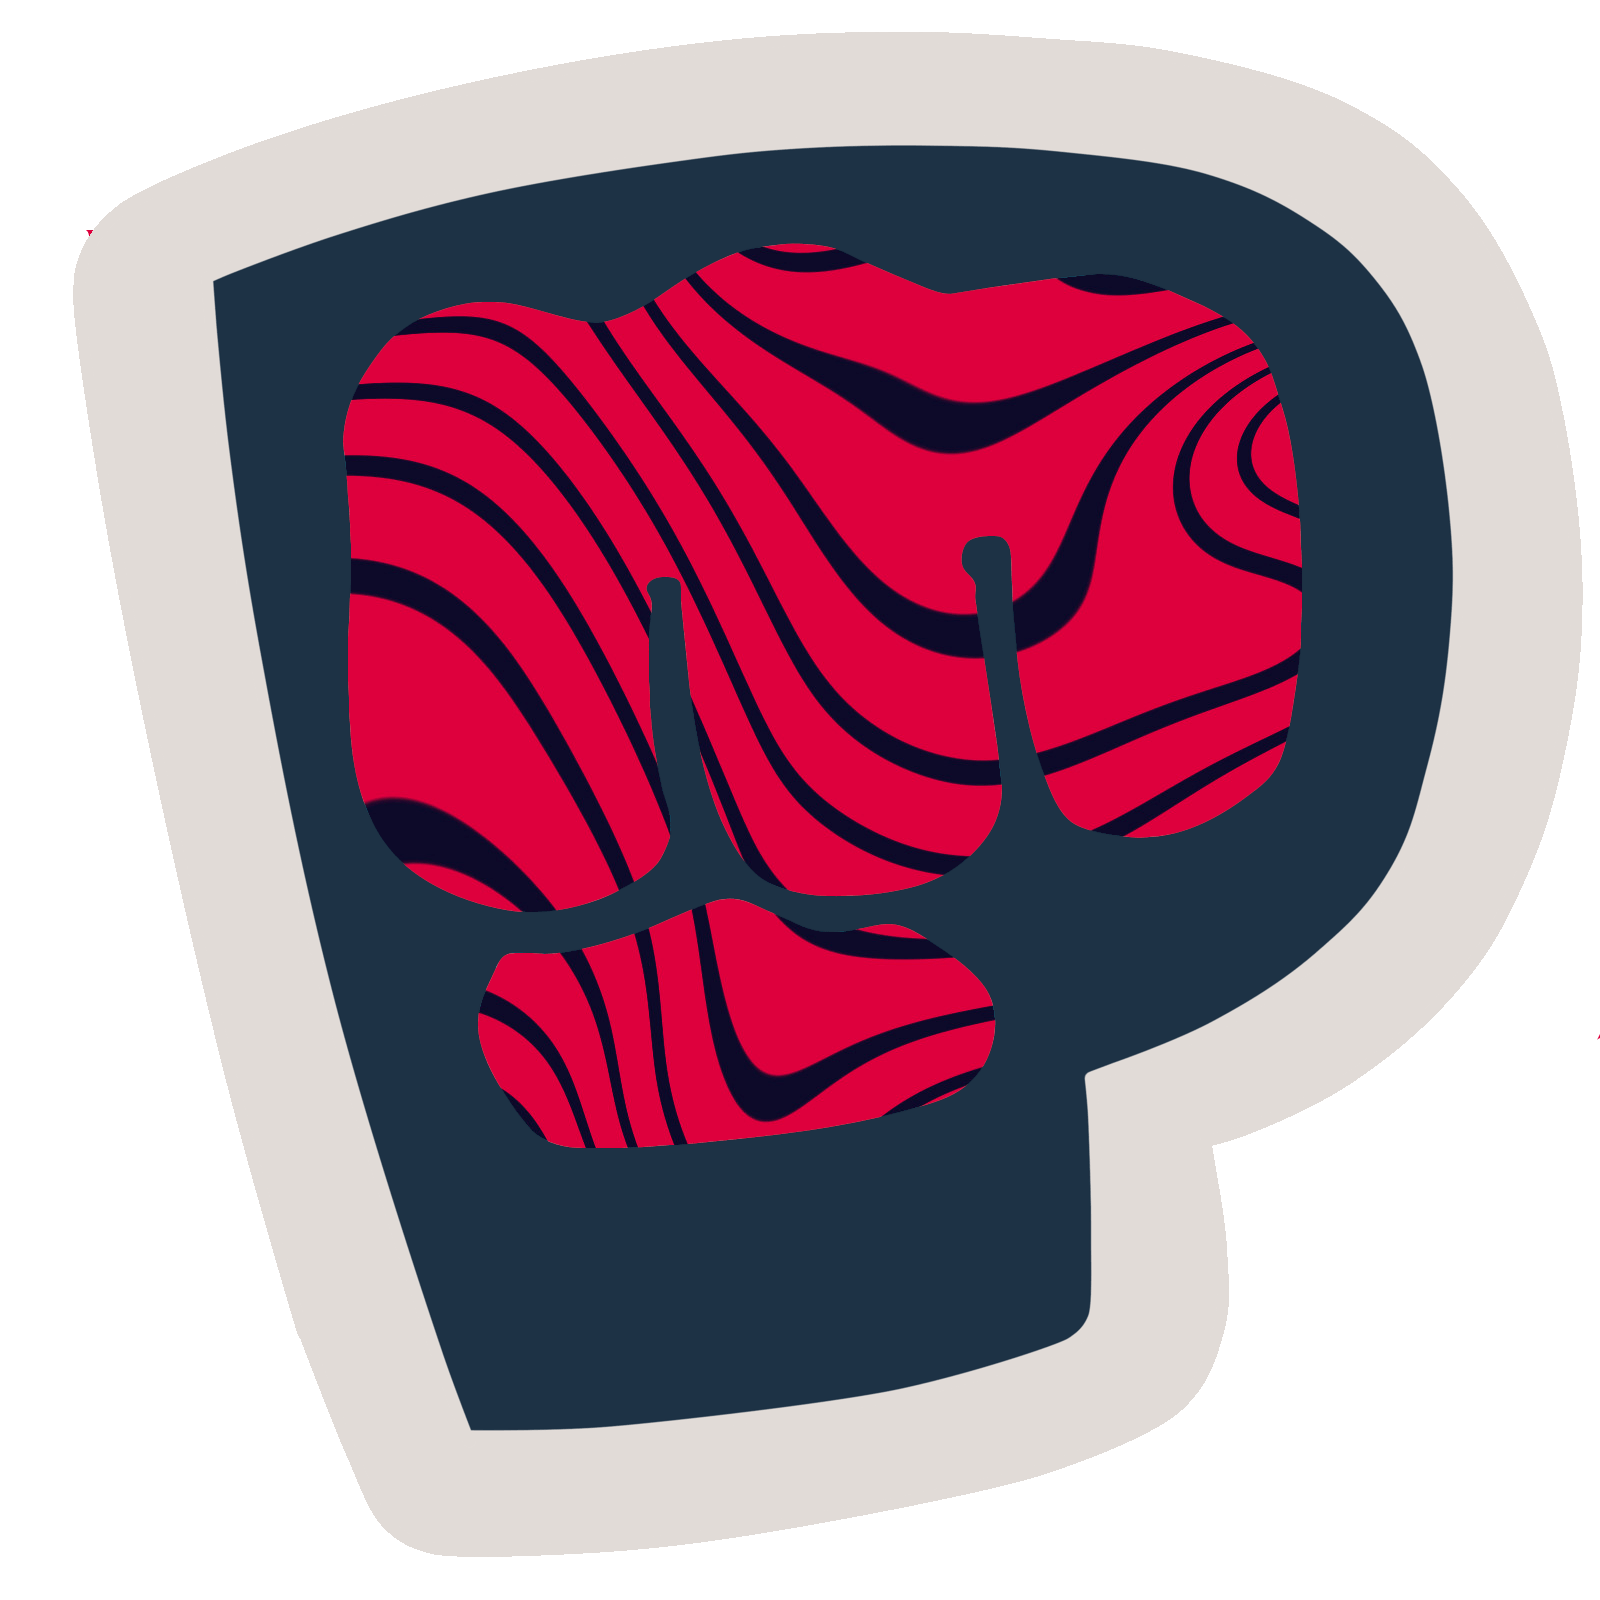 Pewdipie Logo - idea for logo when Pewdiepie gets 100 million subs ...